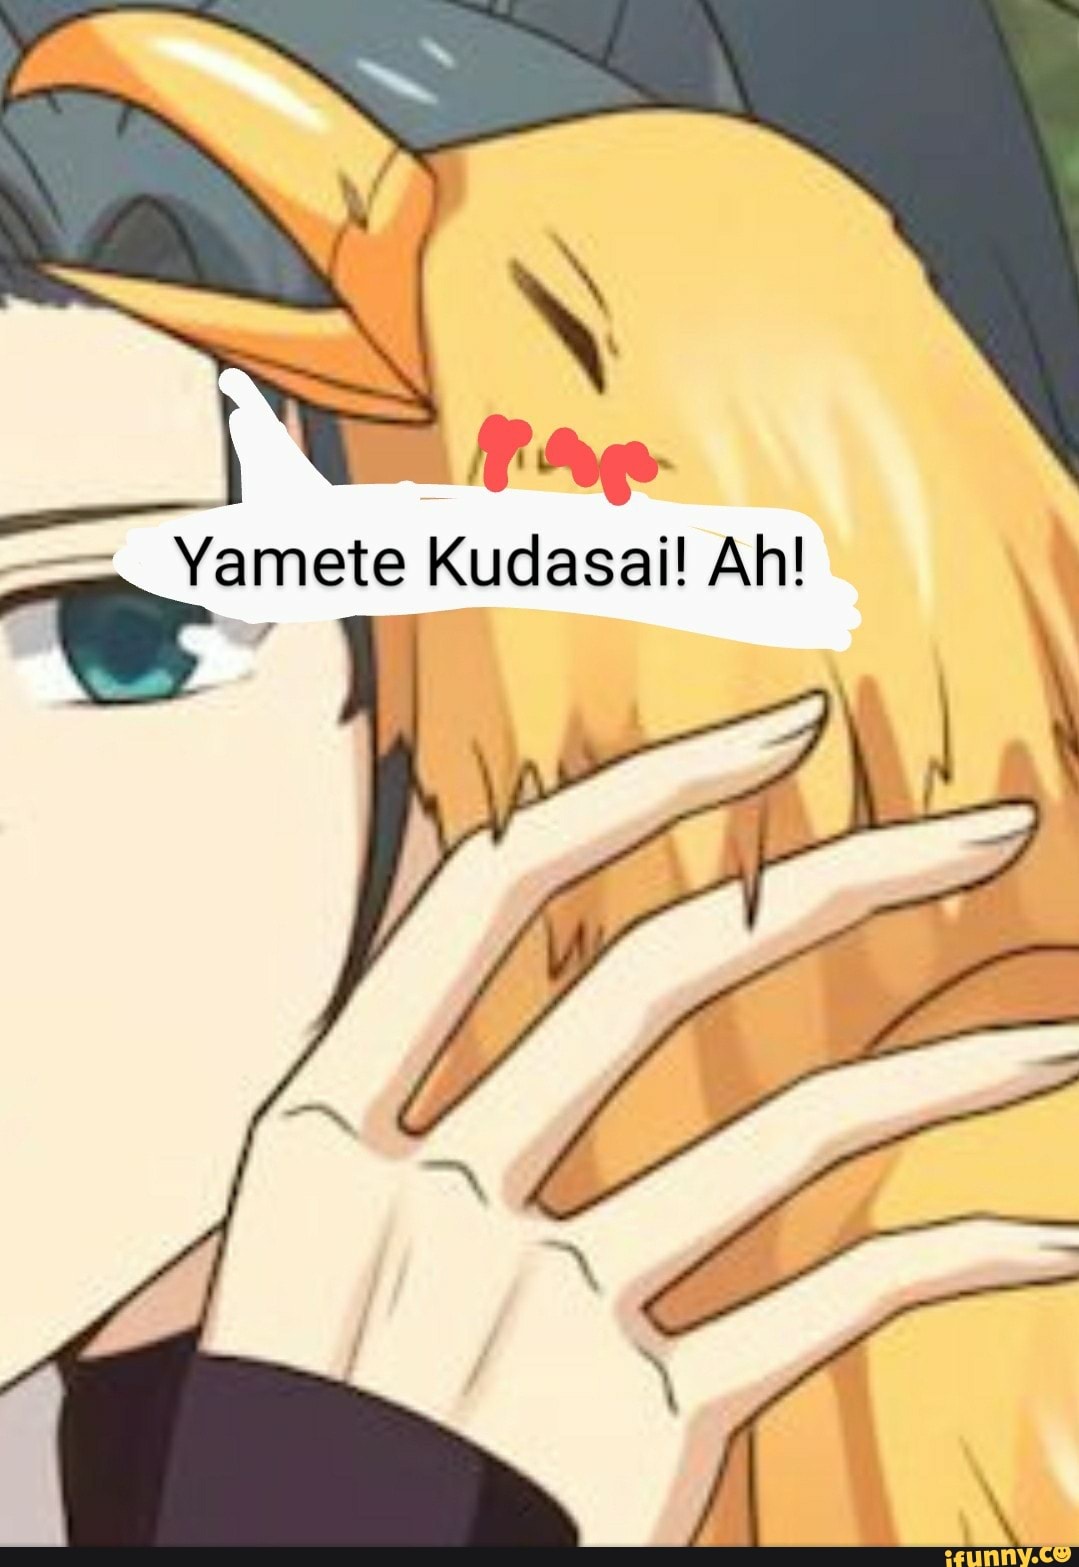 r/animemes on X: Yamete kudasai #Animemes #memes #anime    / X